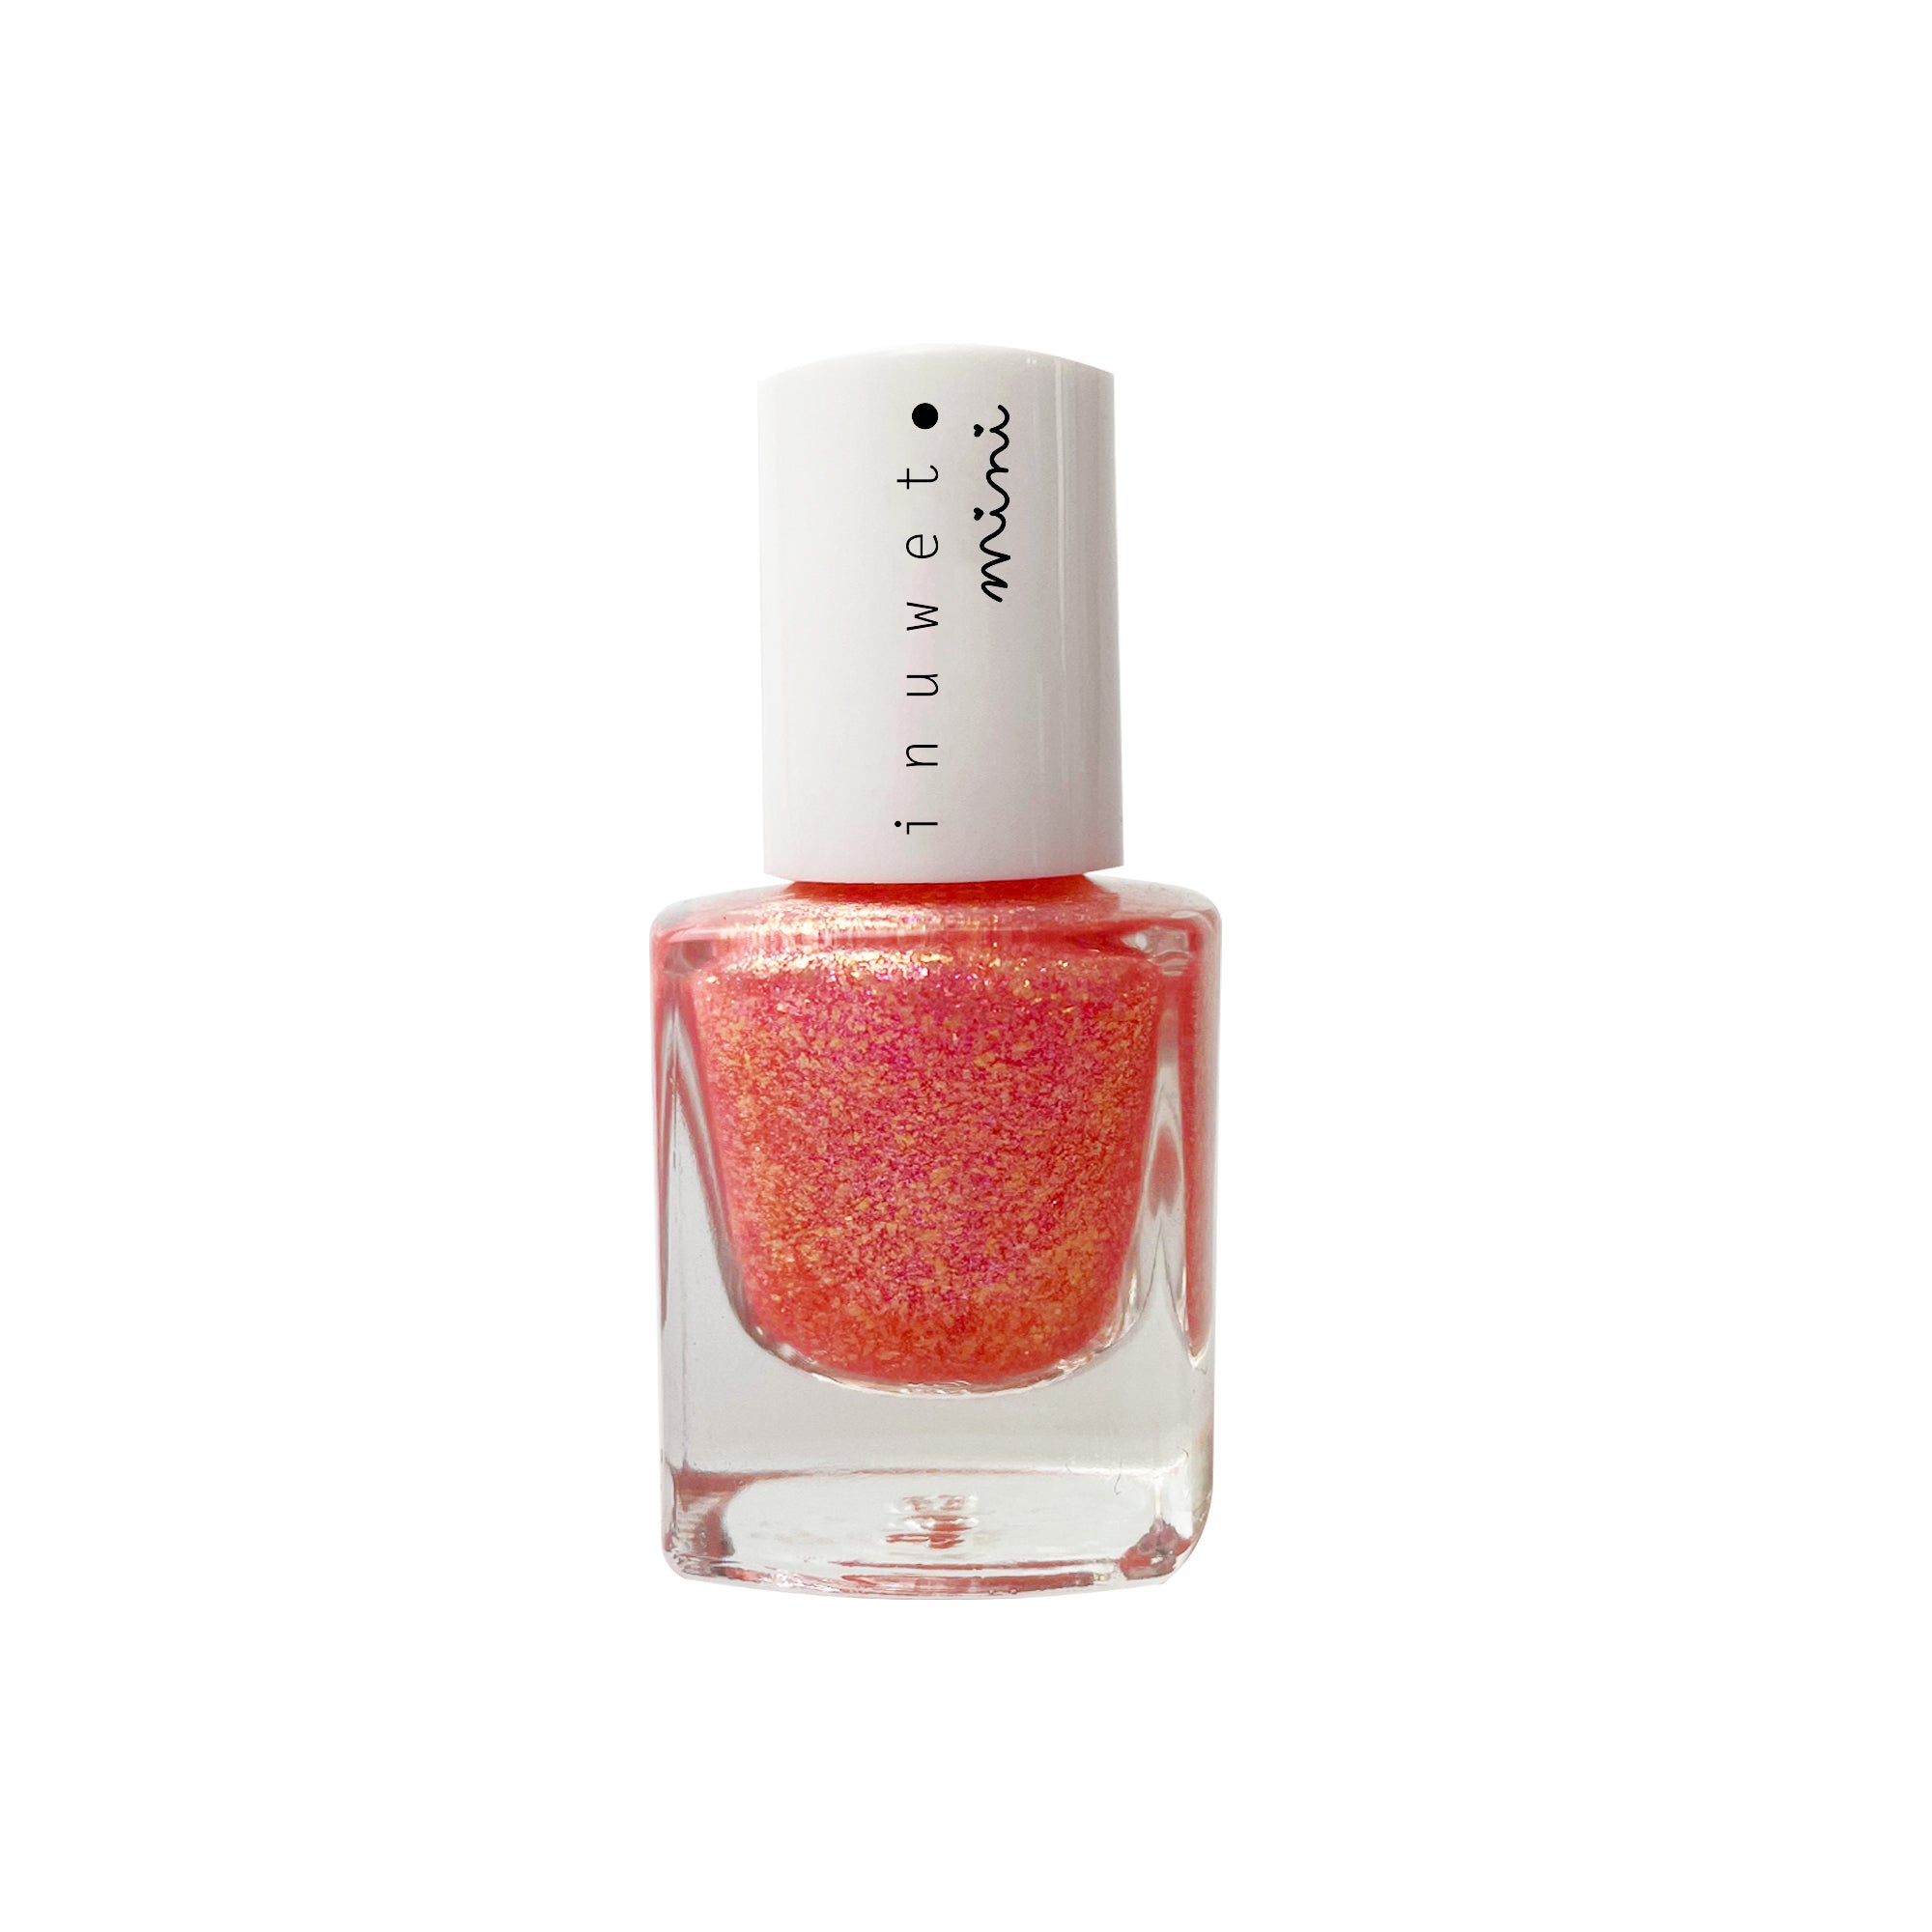 inuwet water based nail polish - pink plum strawberry